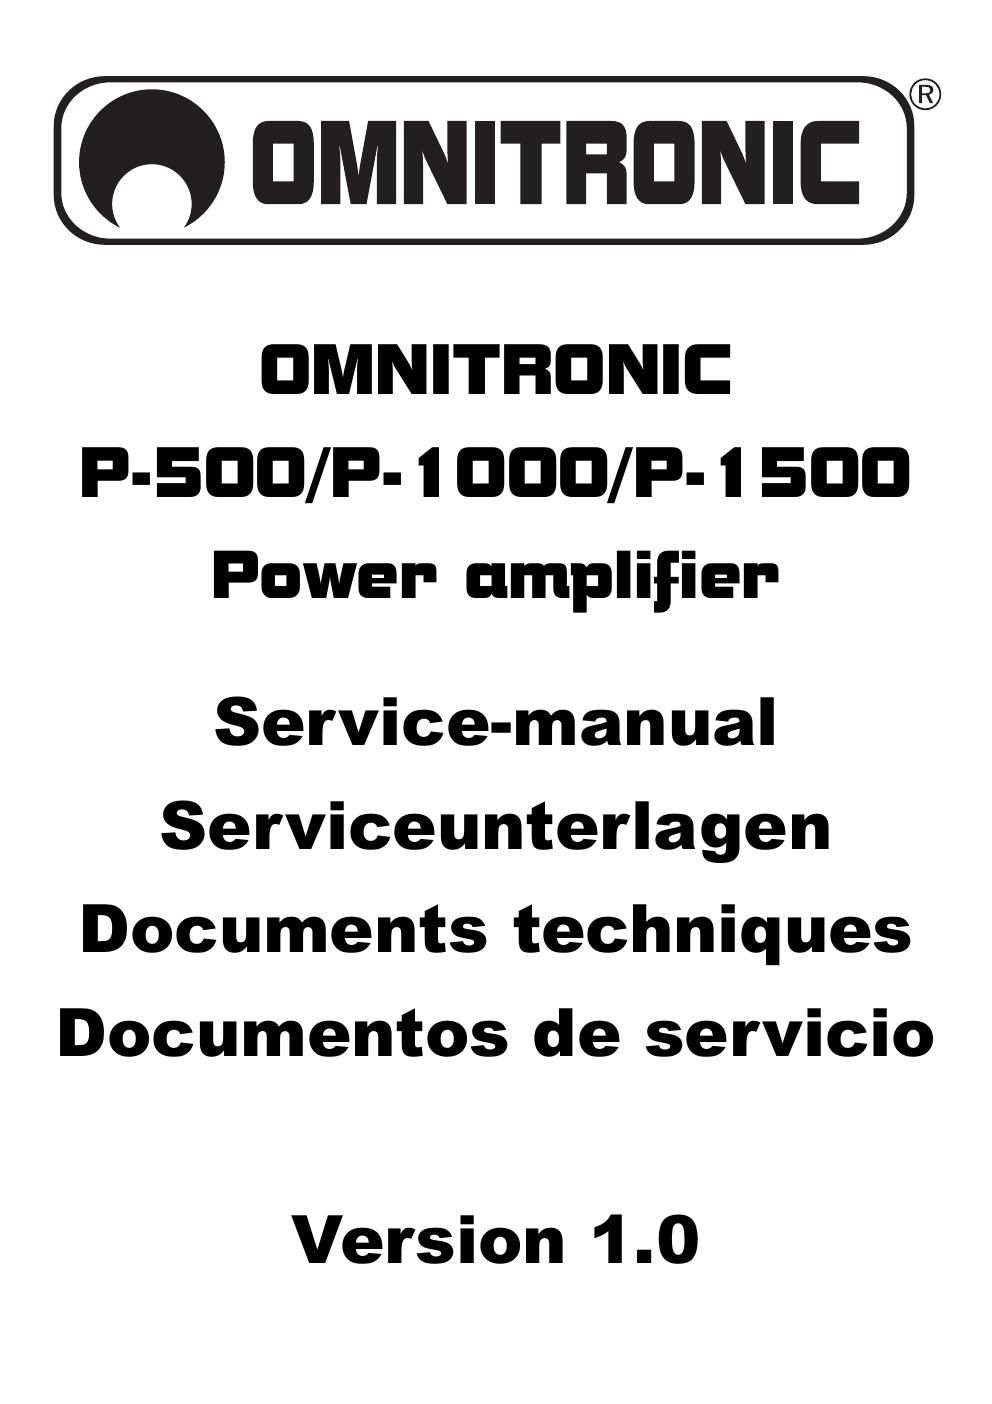 omnitronic p 500 1000 1500 sch